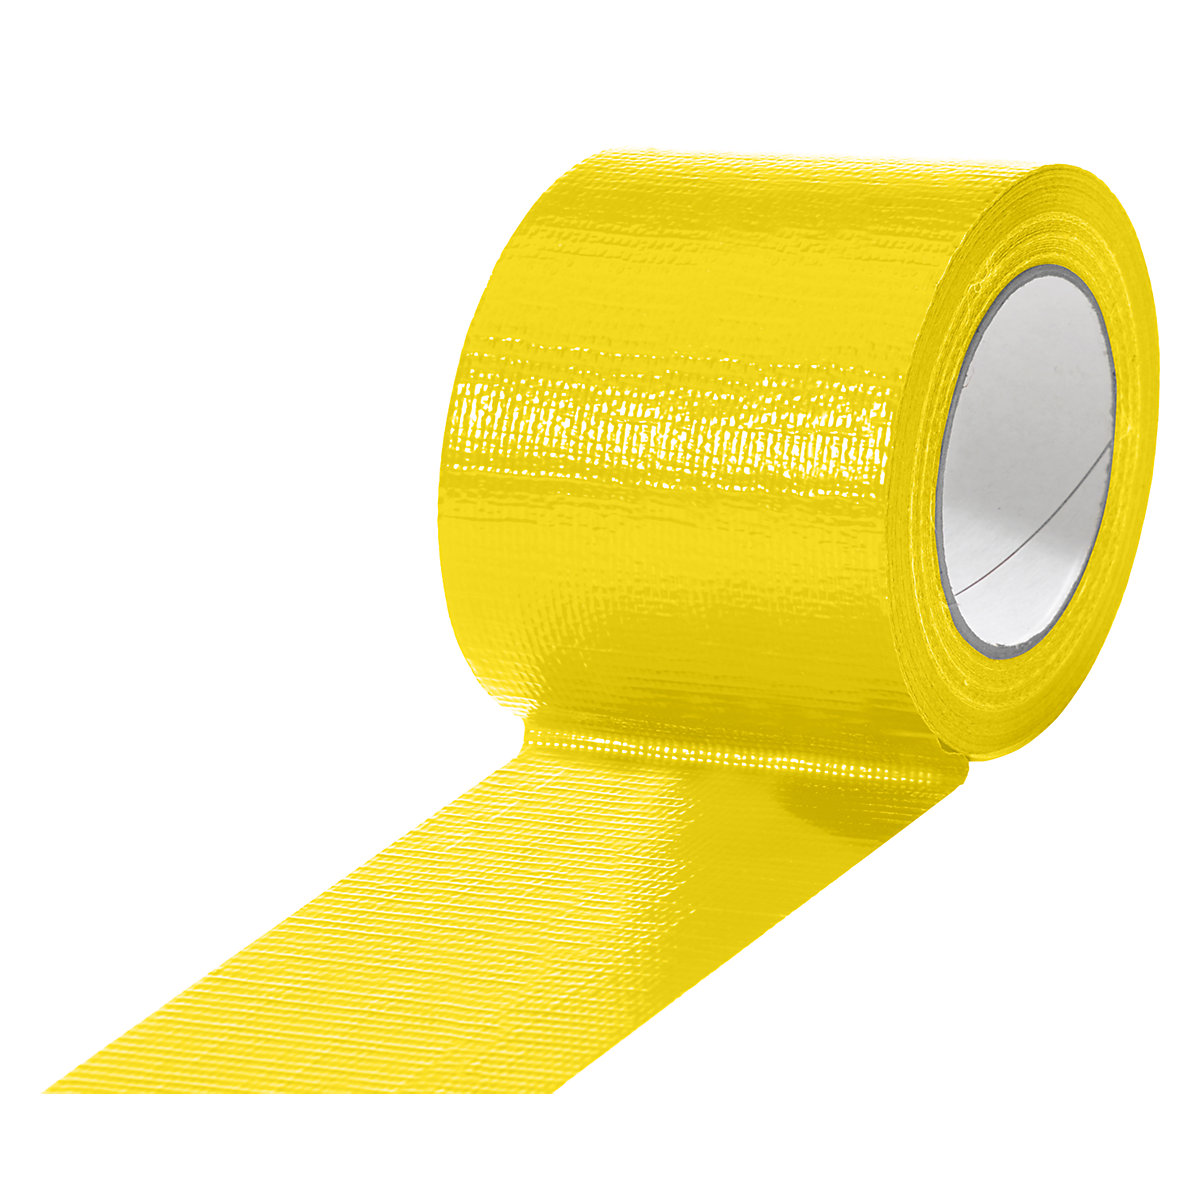 Tkaninová páska, v různých barvách, bal.j. 12 rolí, žlutá, šířka pásky 75 mm-8